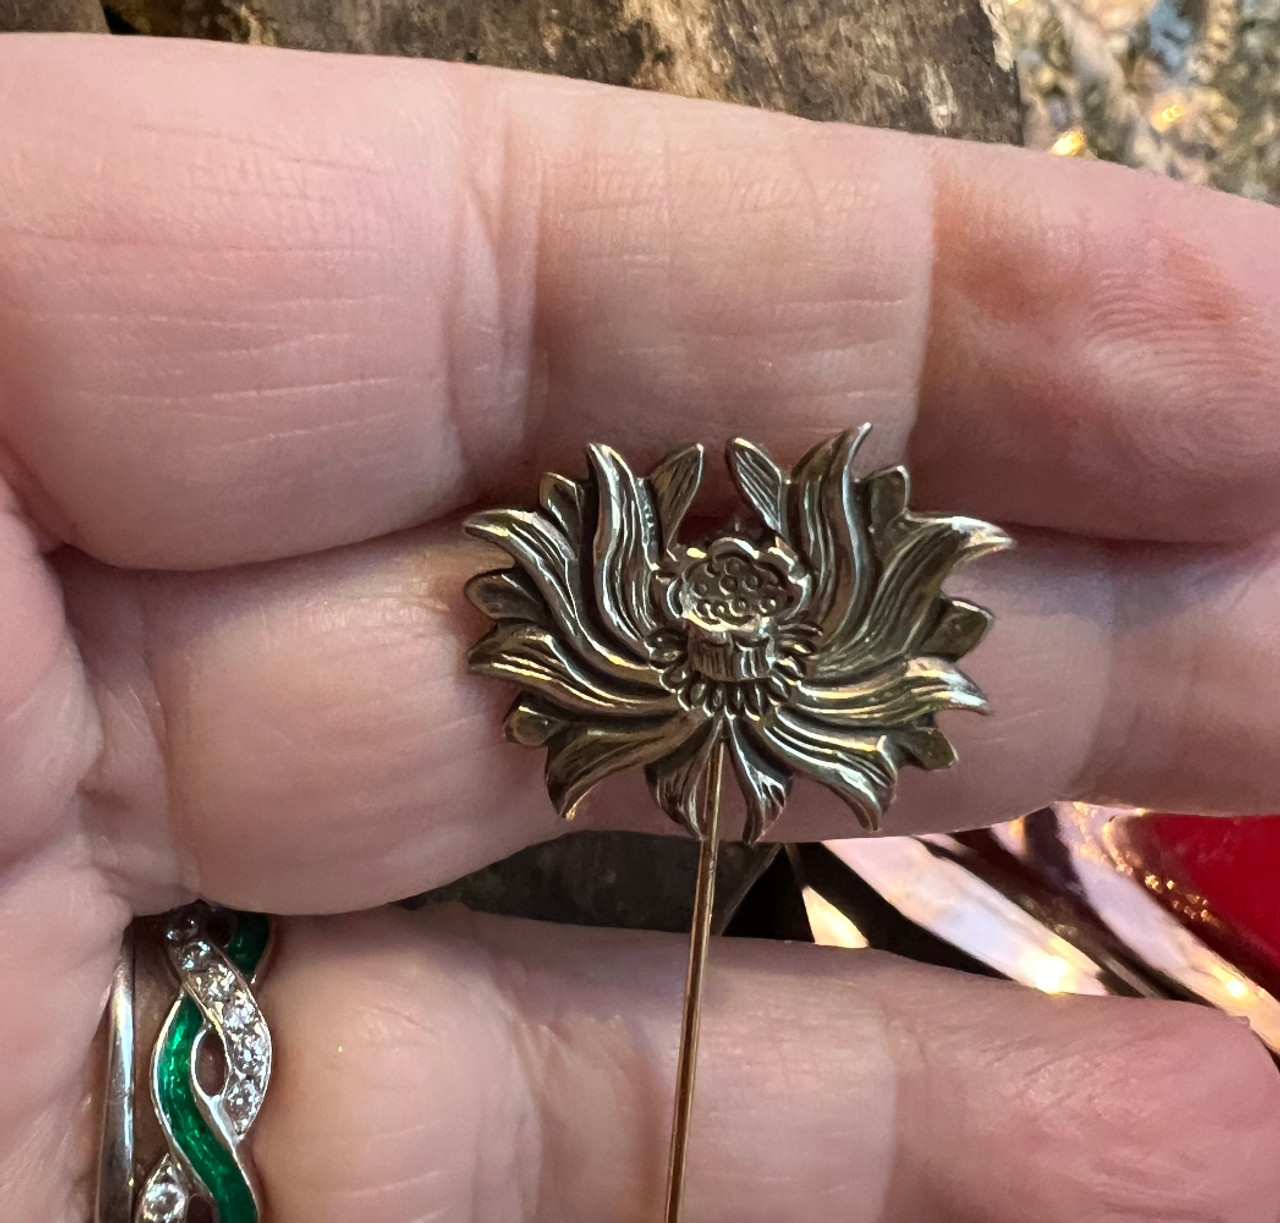 Handmade 100% 925 Sterling Silver Golden Lotus Flower Brooch For